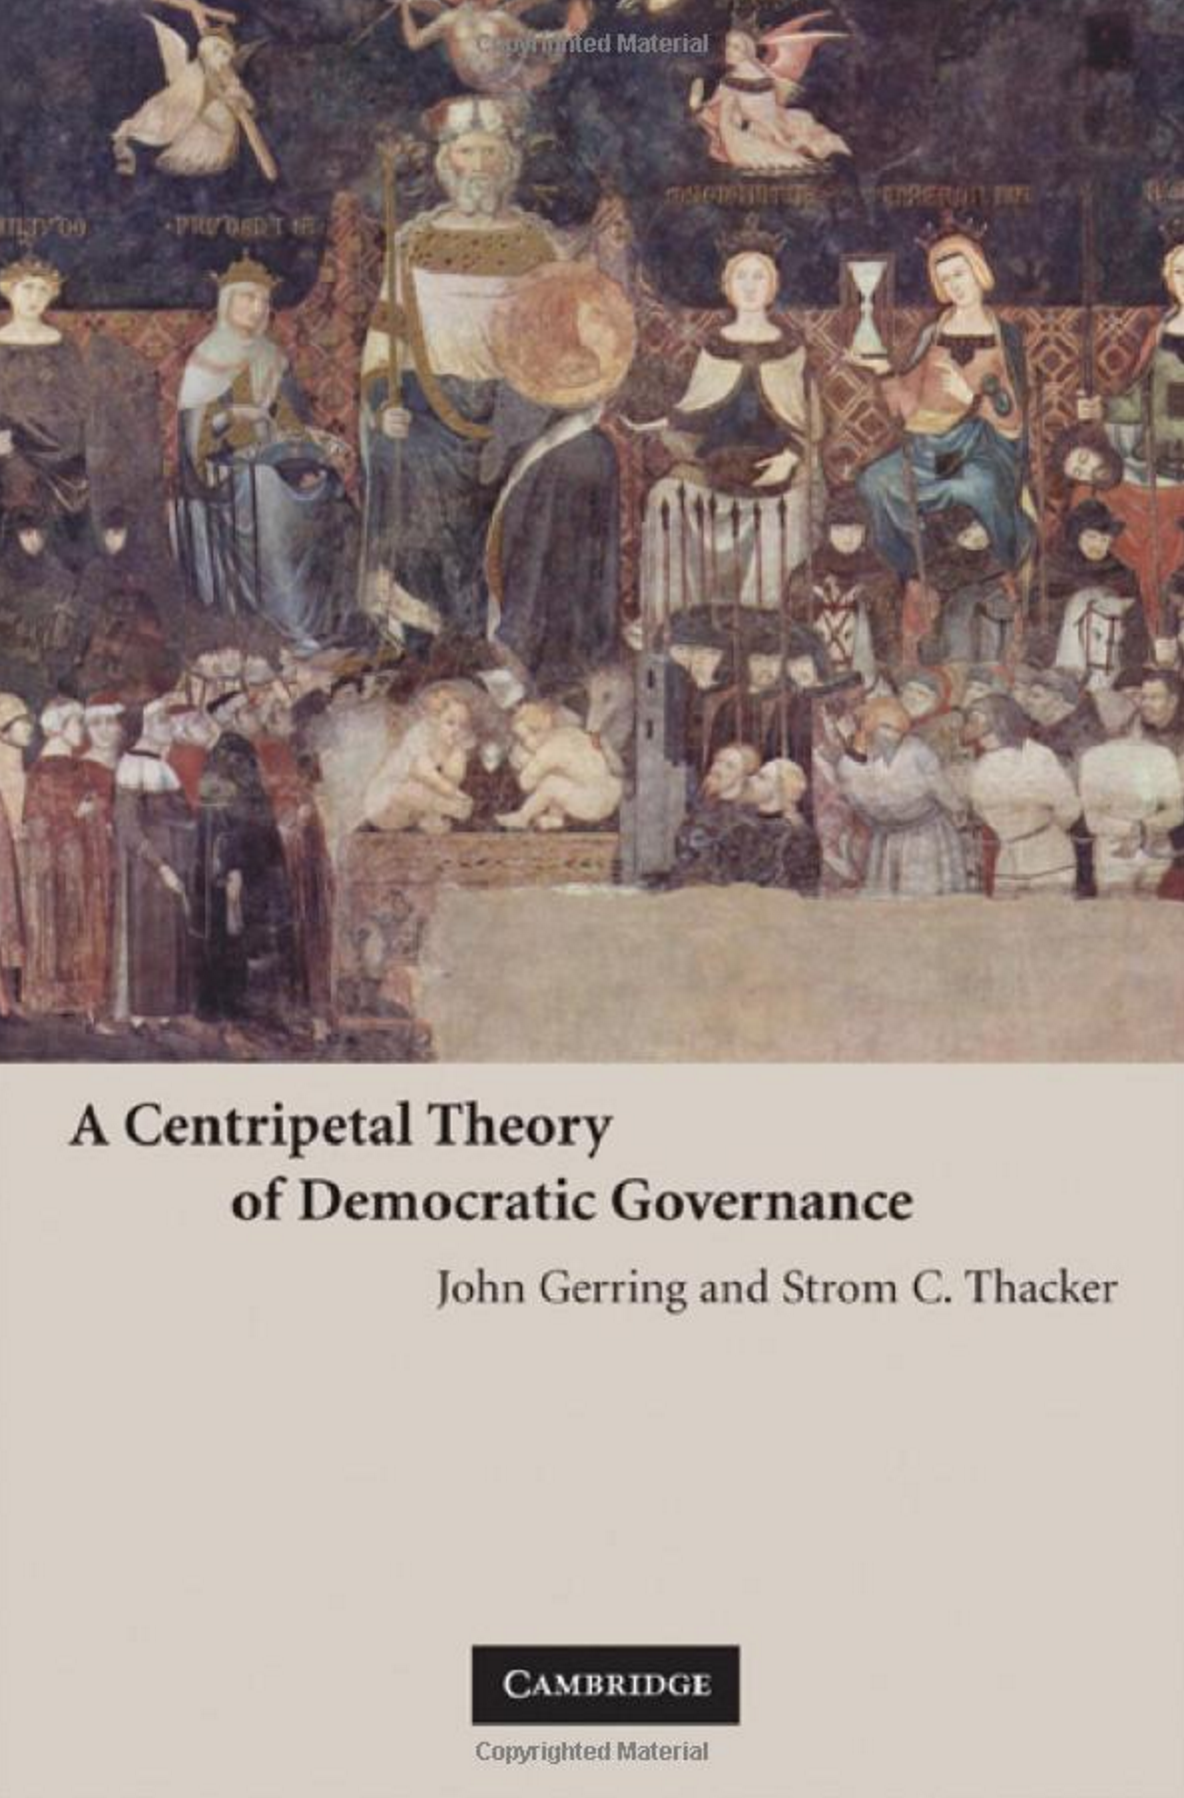 A Centripetal Theory of Democratic Governance